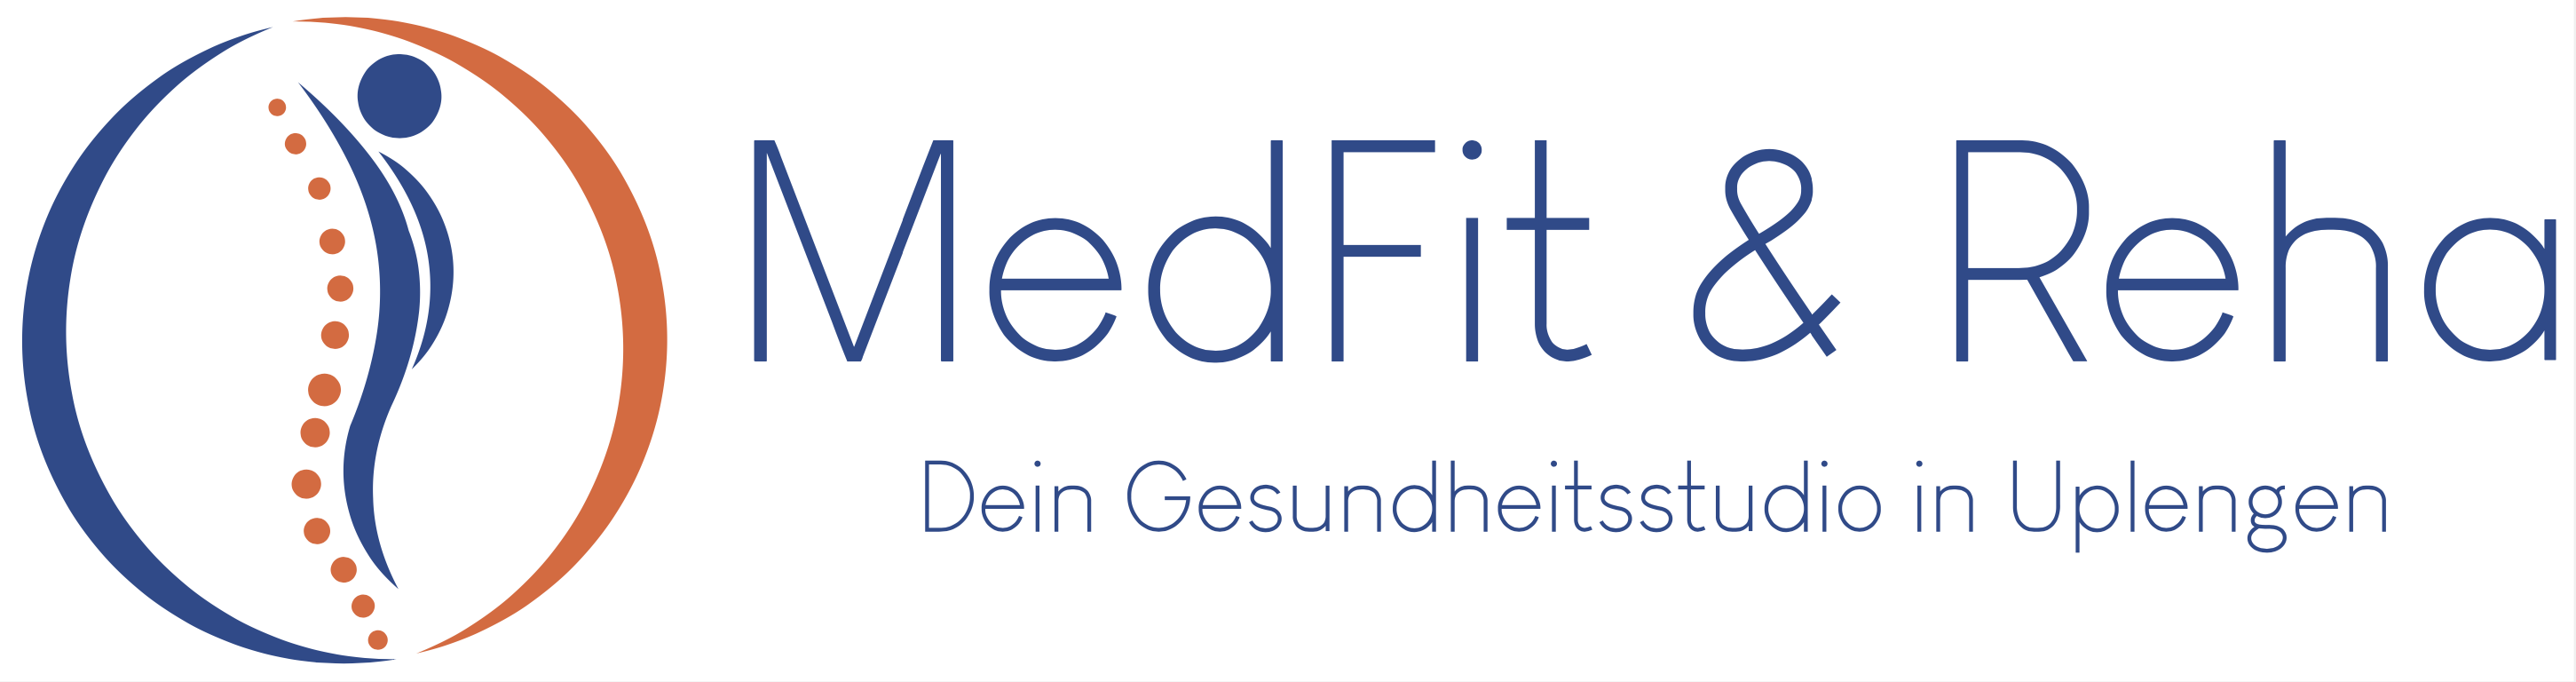 MedFit & Reha Uplengen - Therapie und Gesundheitsstudio in Remels